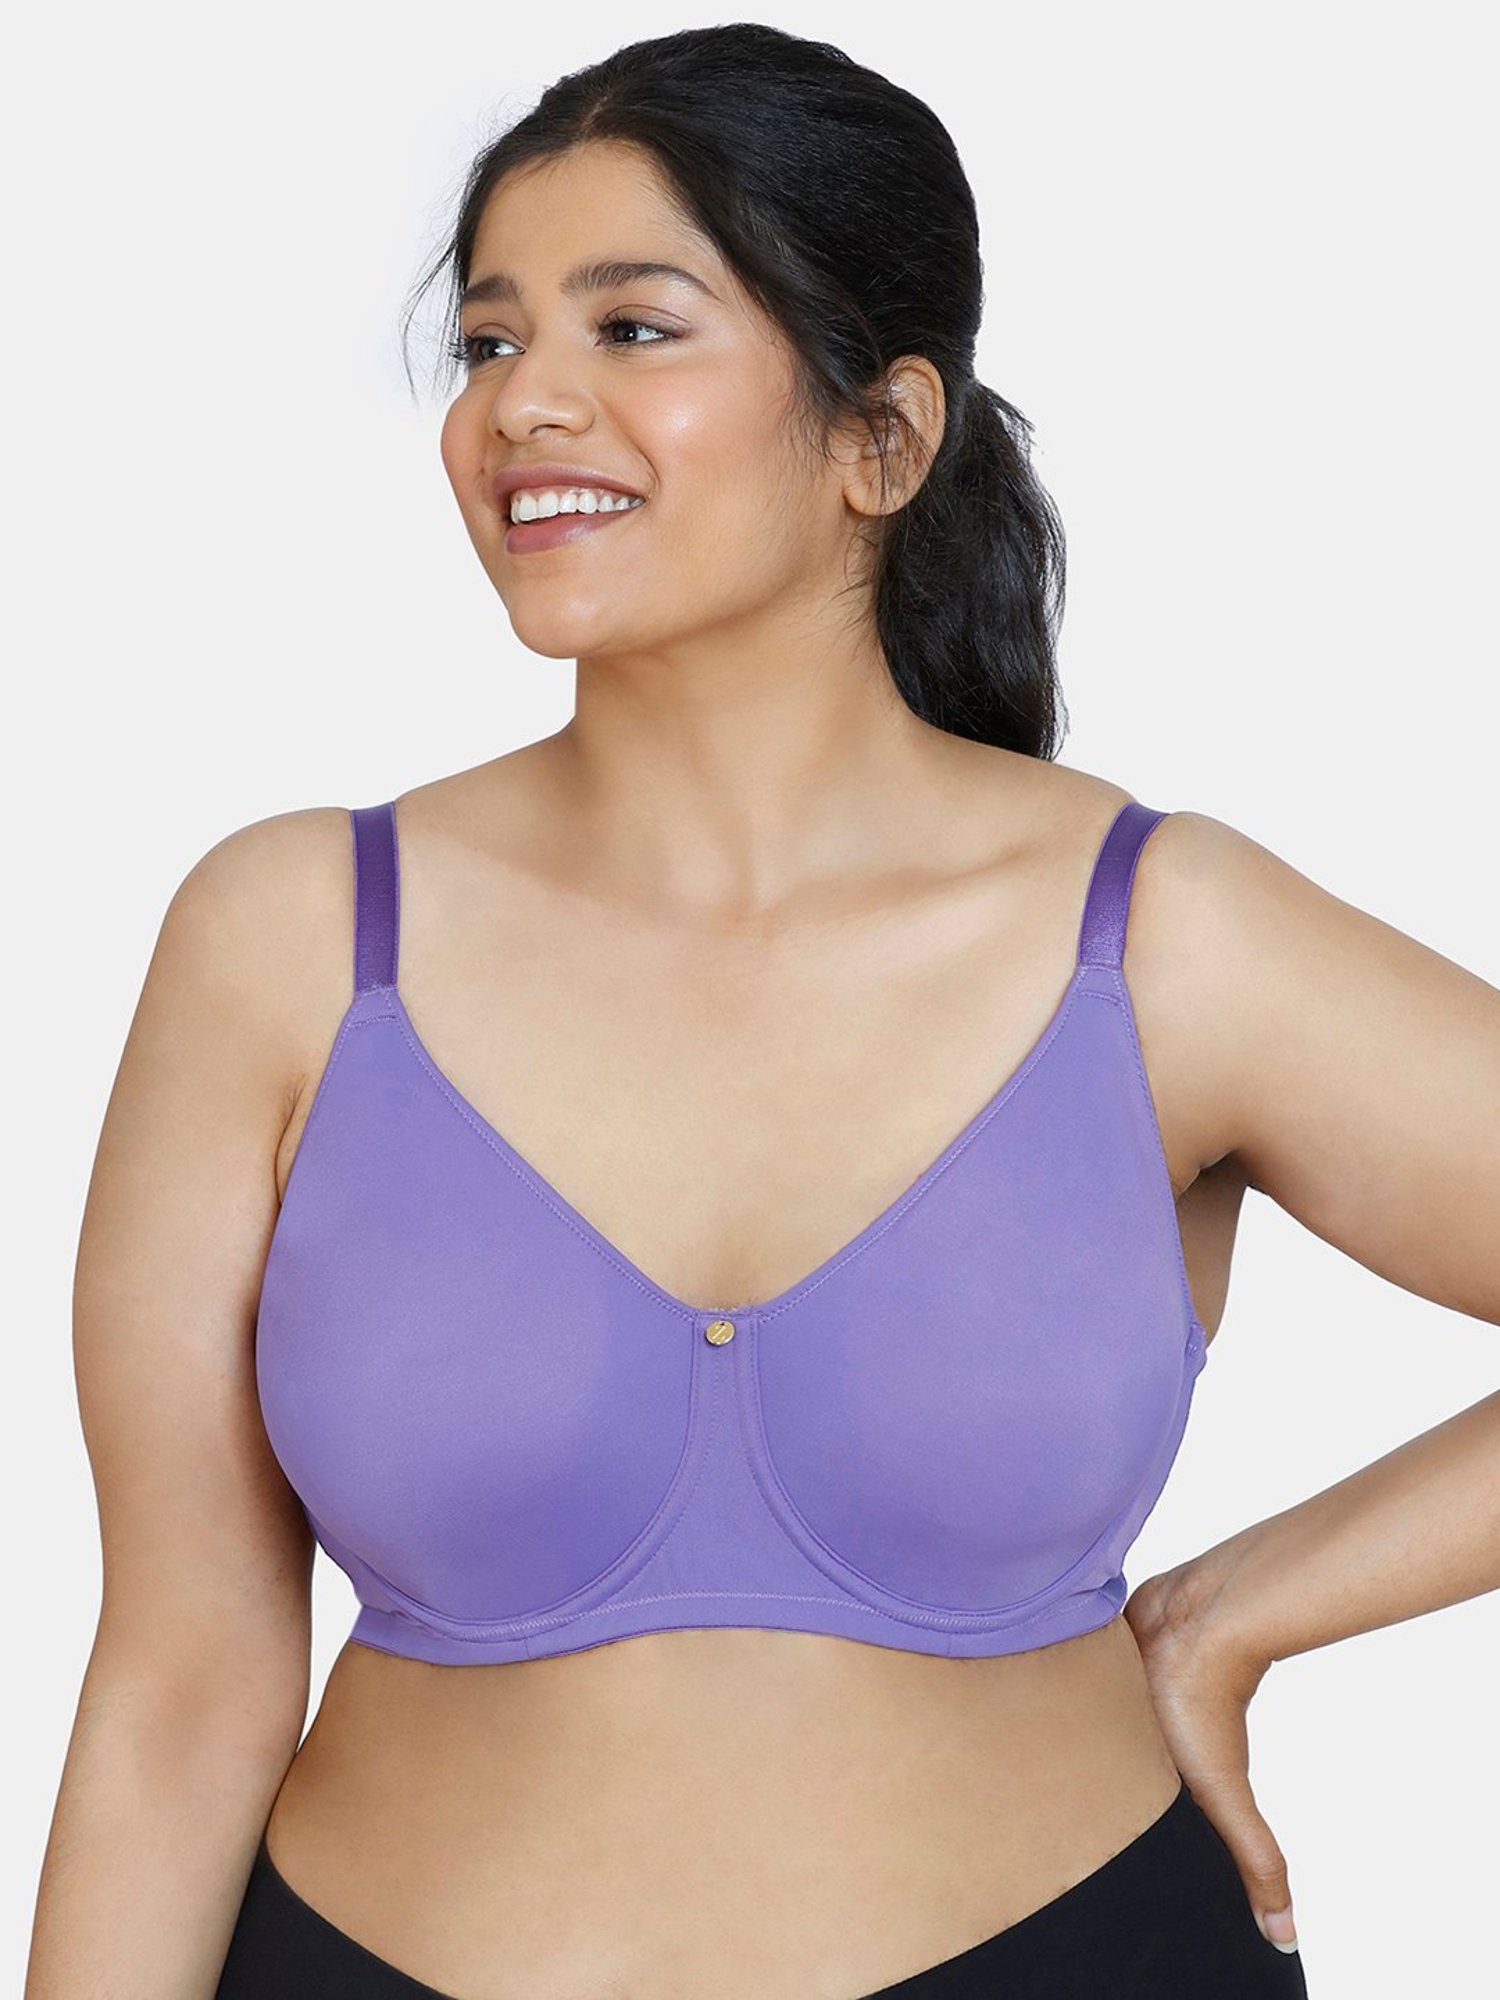 Intimissimi purple balconette-style bra (34B) and matching thong (S)